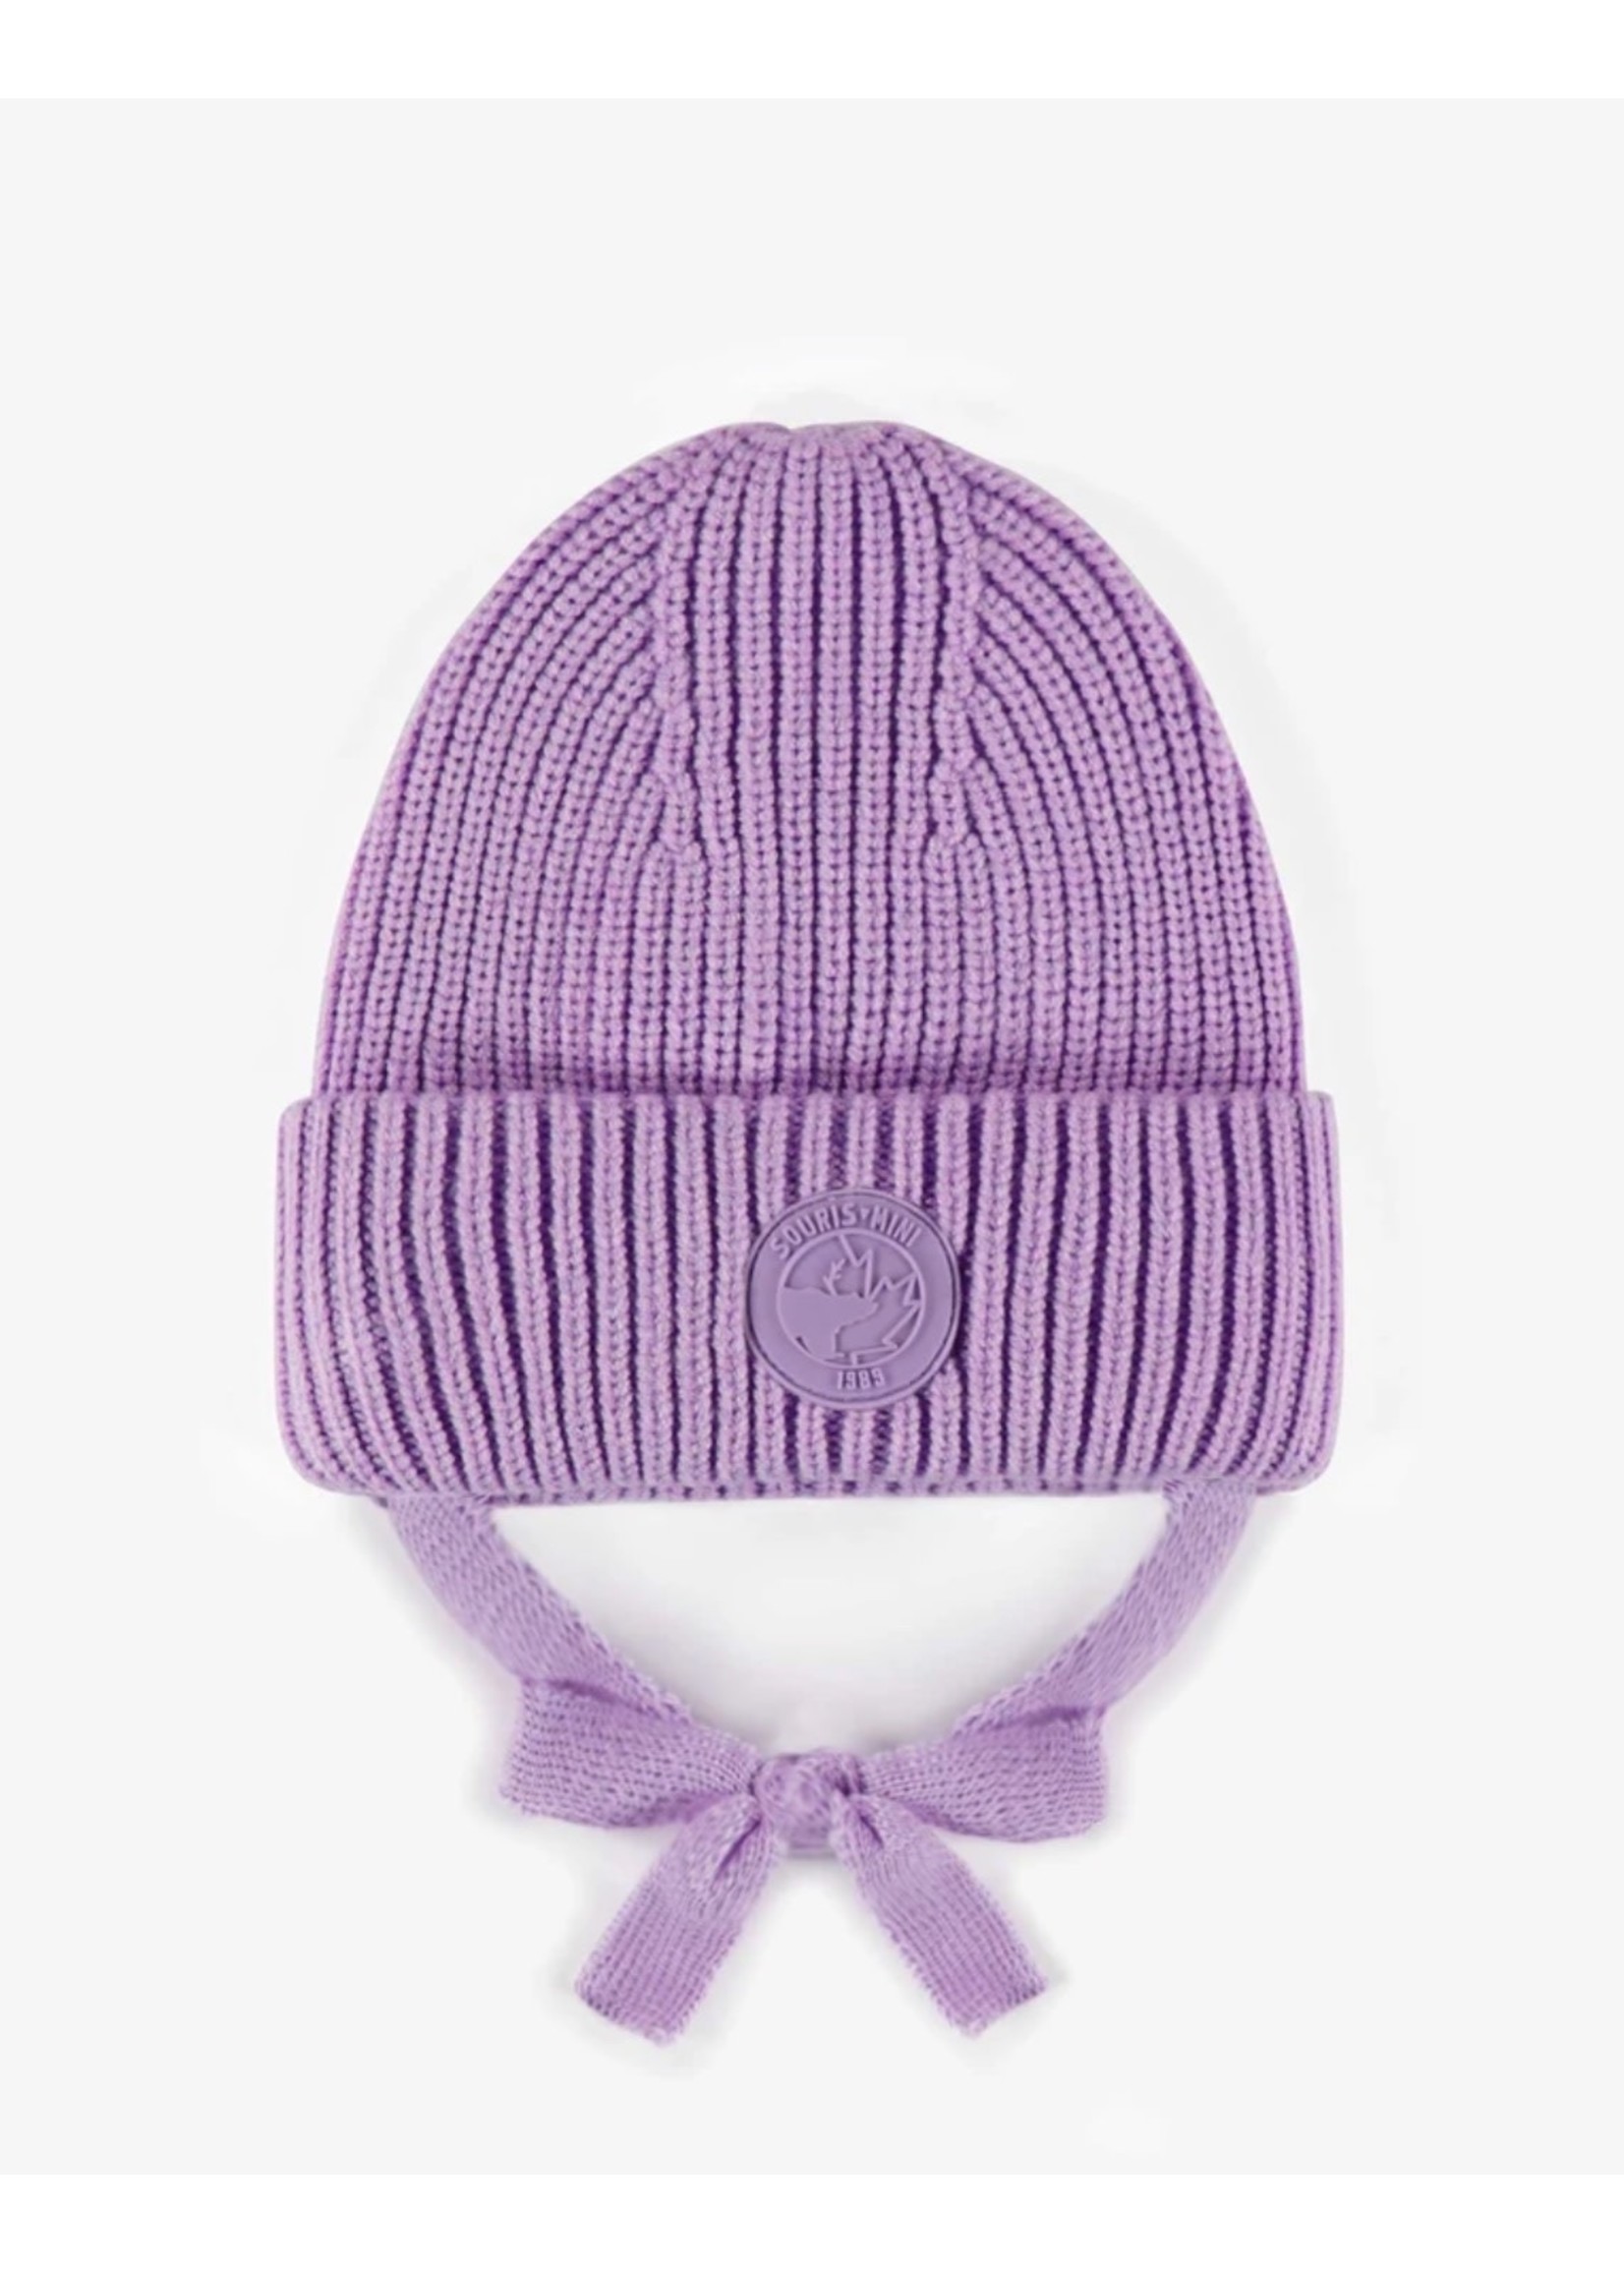 Souris Mini Souris Mini, Purple Knitted Baby Toque